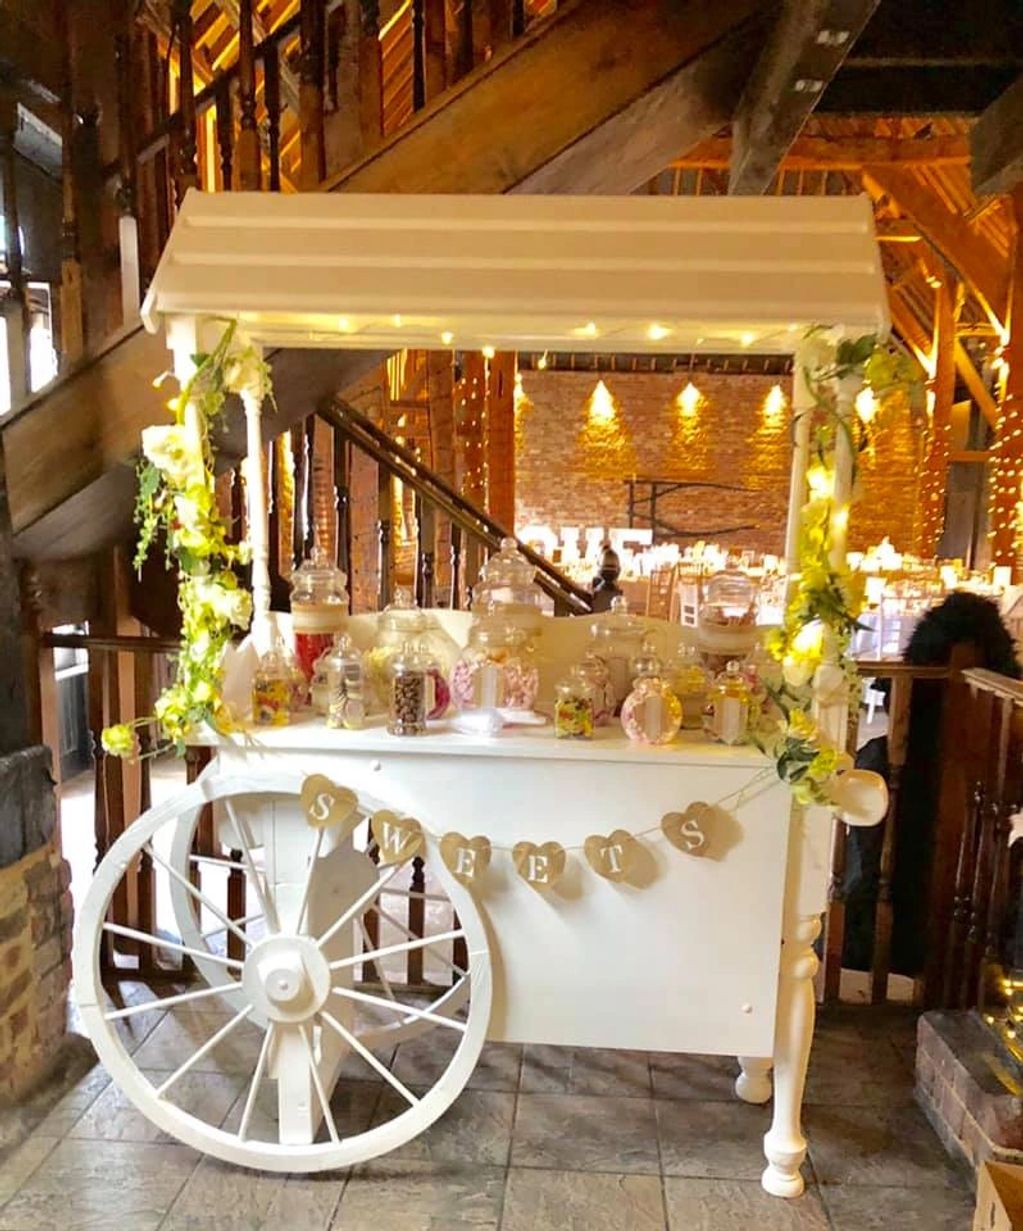 Sweet cart wedding
rustic sweet cart